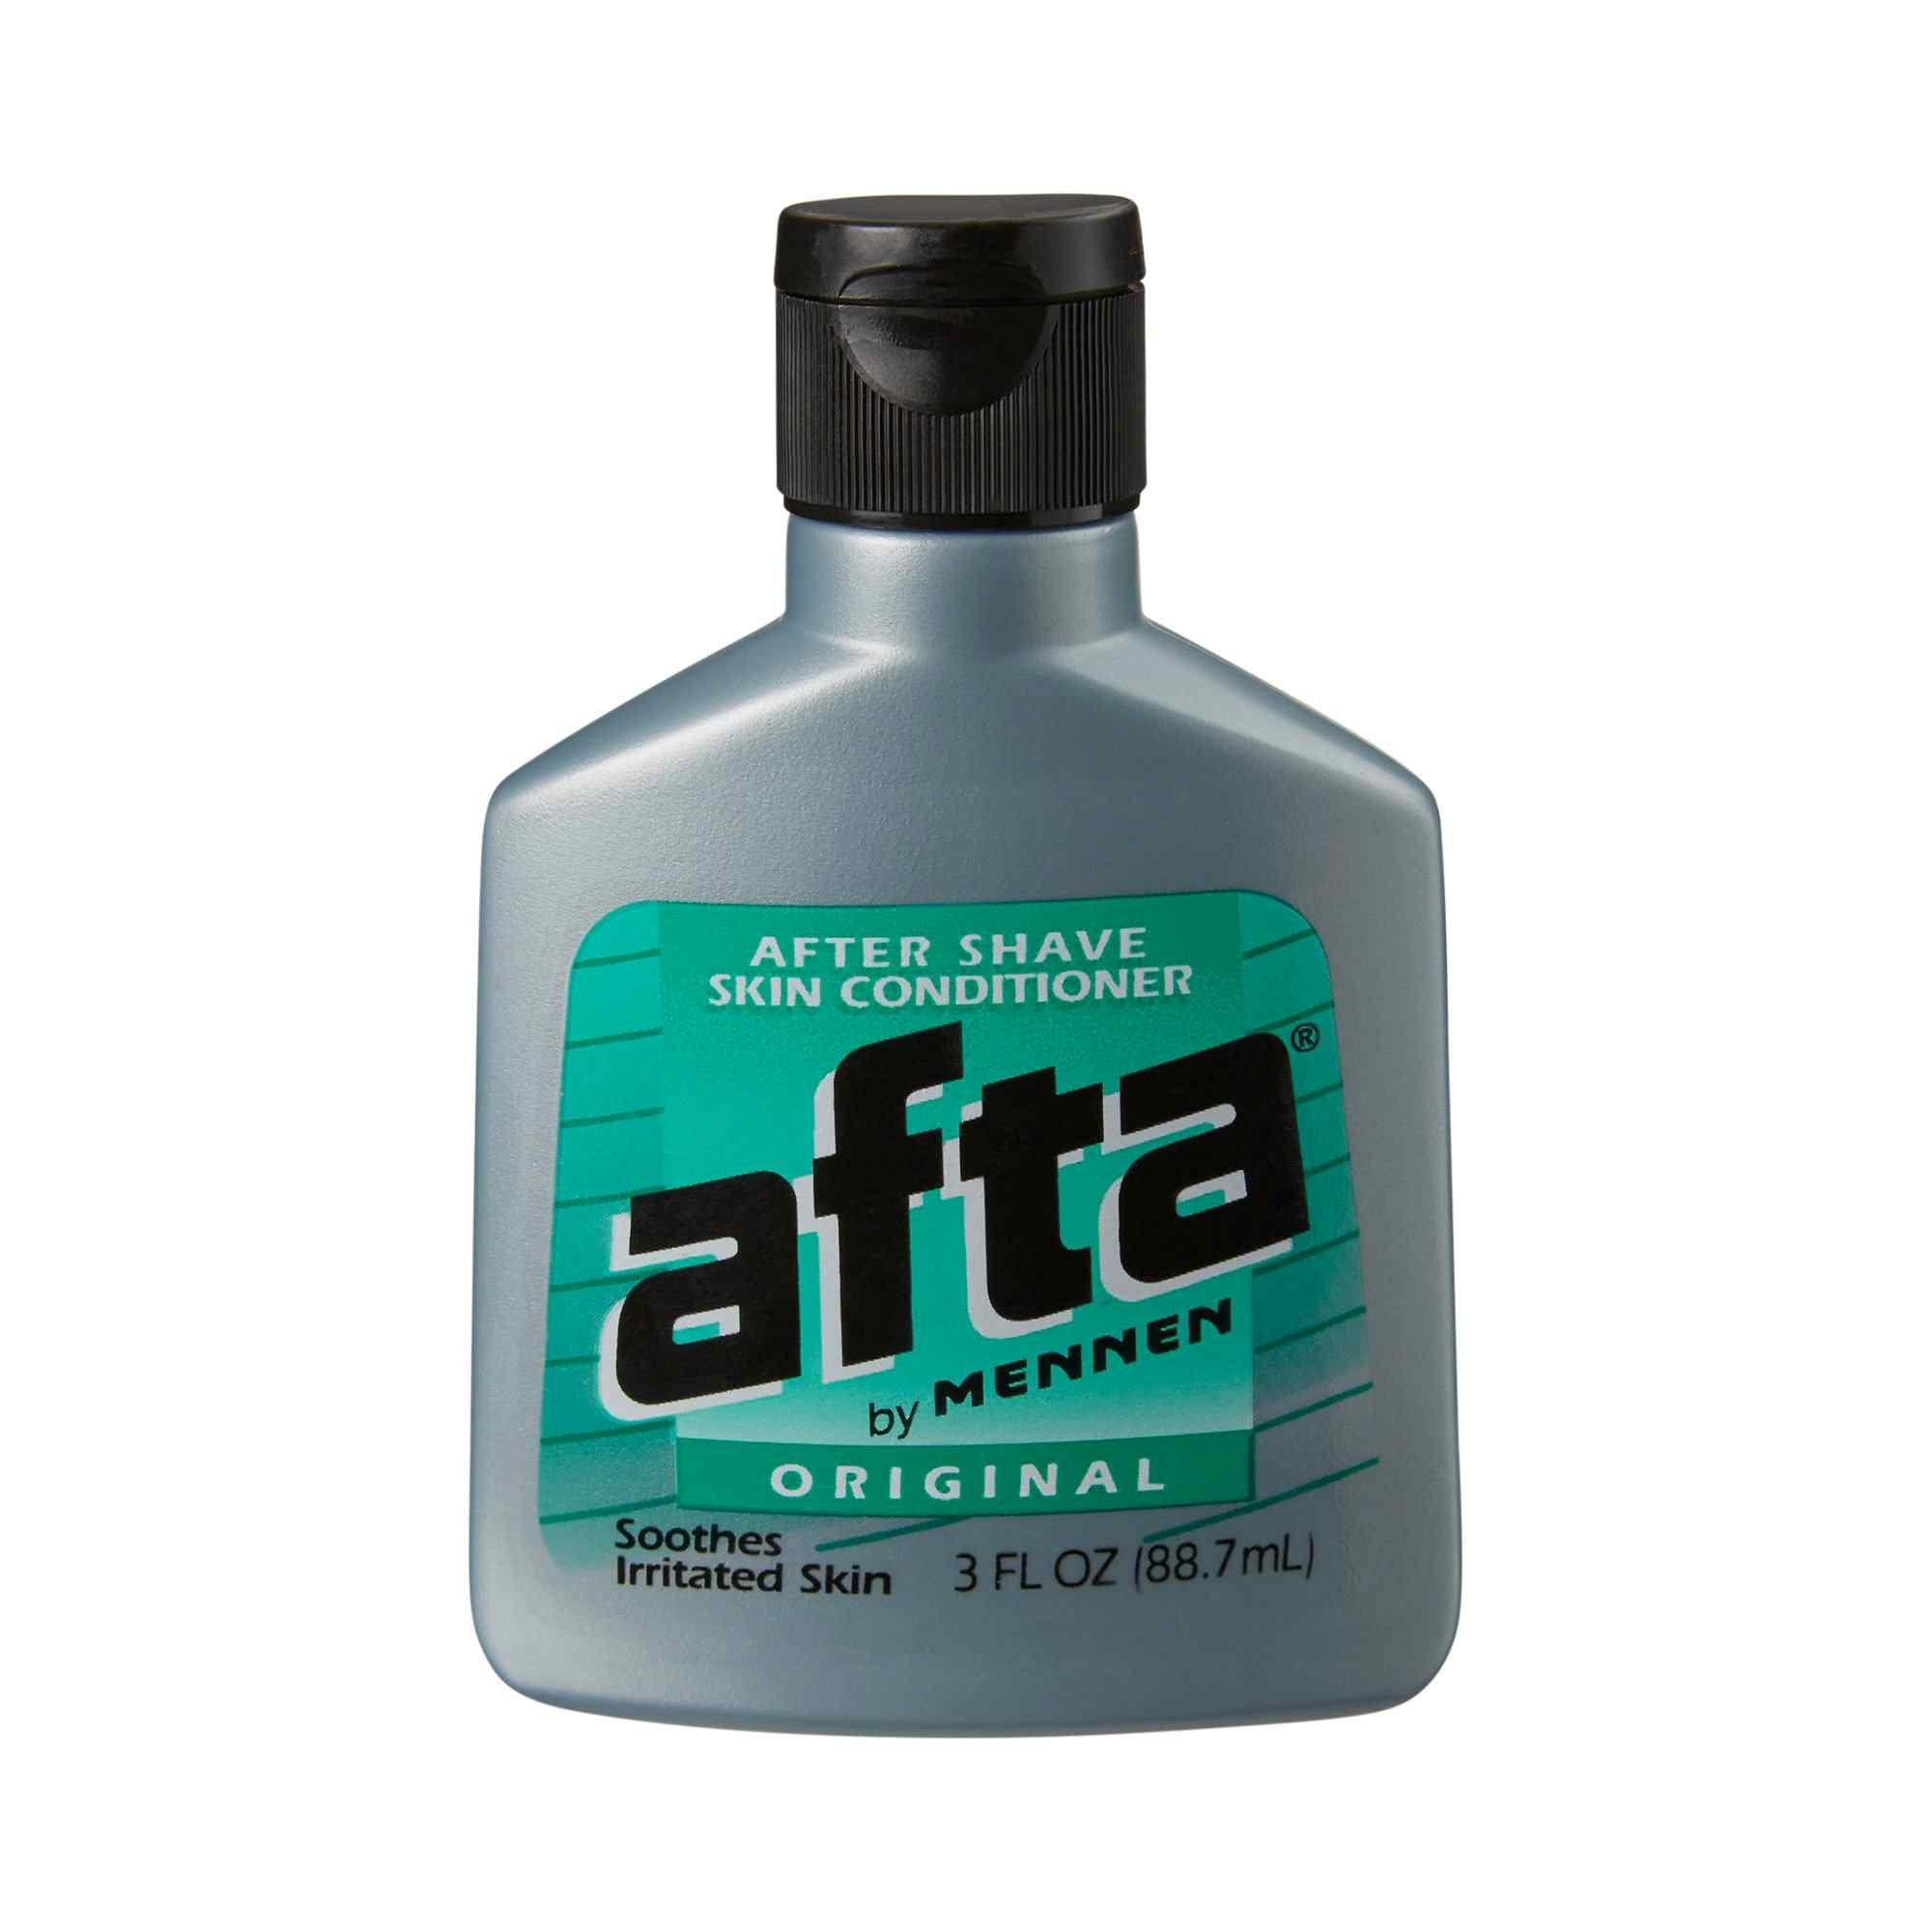 Afta by Mennen Original After Shave Skin Conditioner